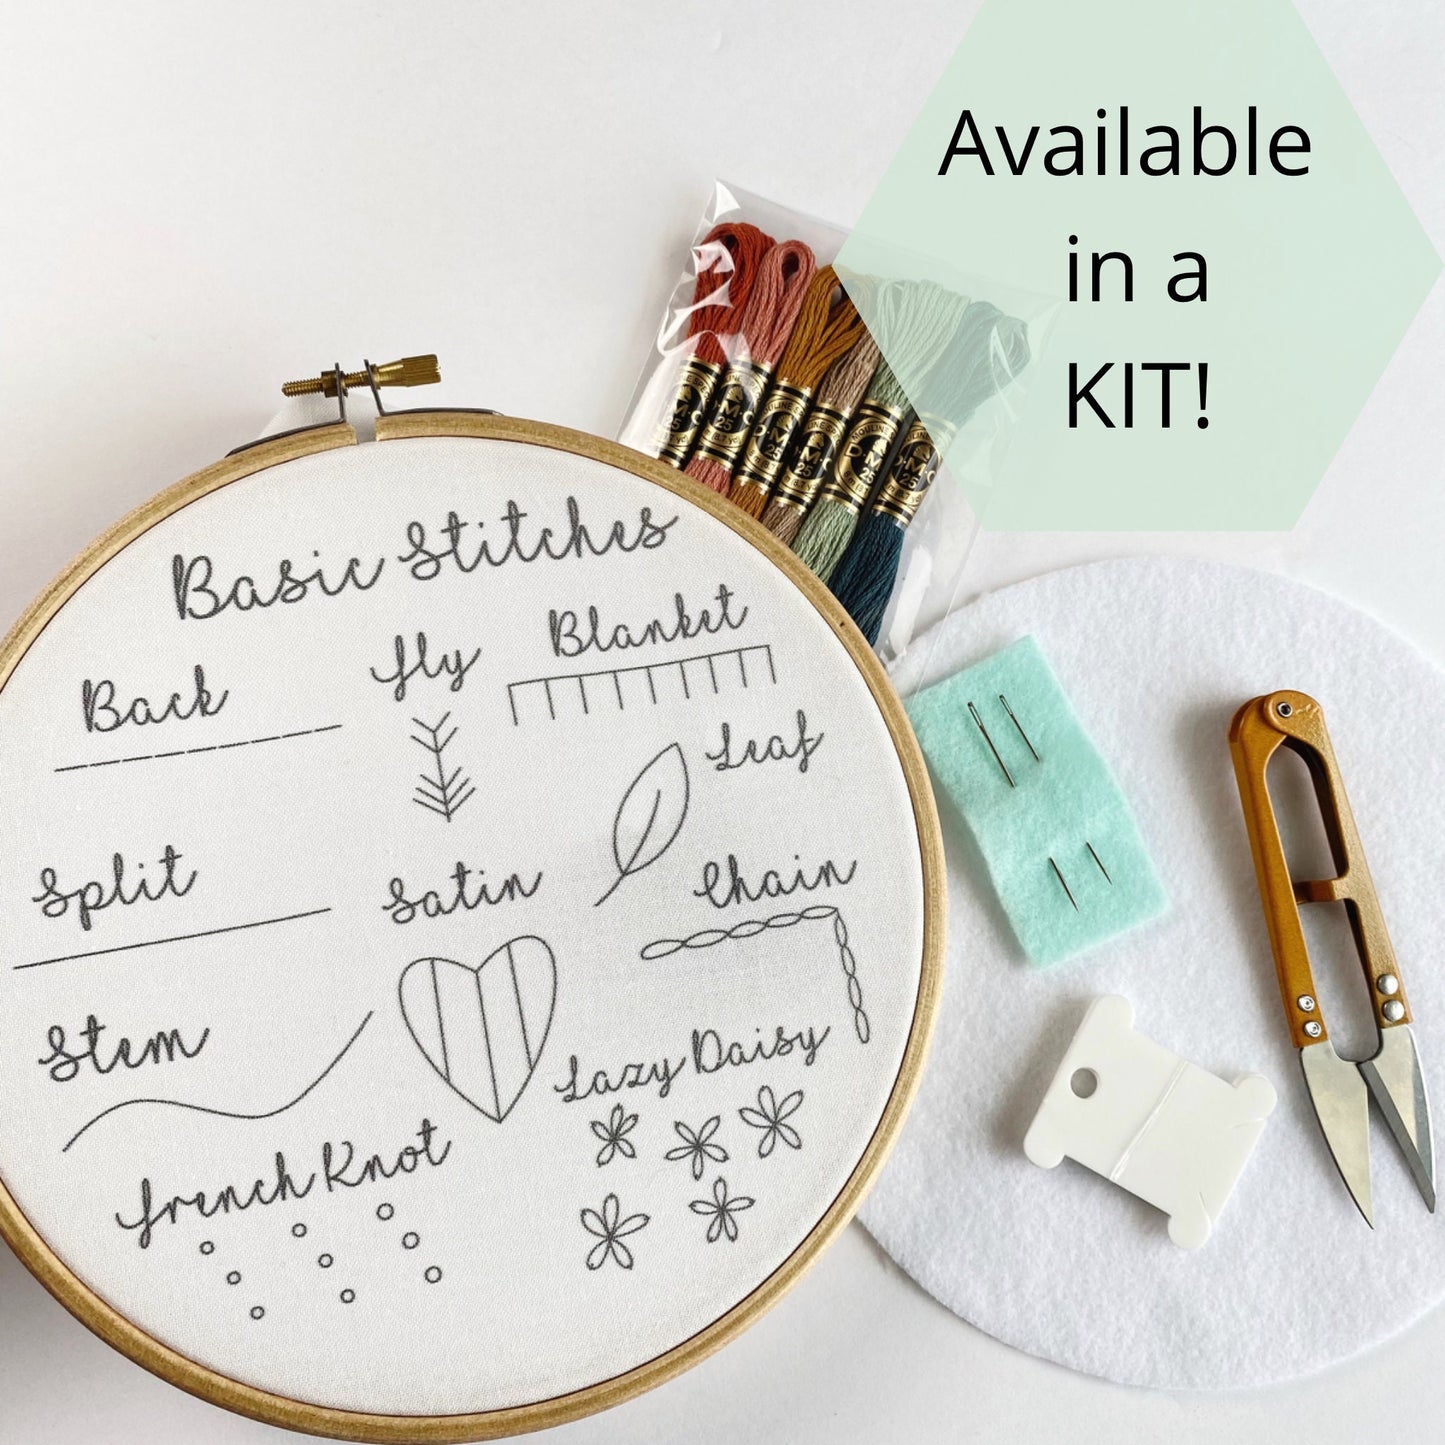 Beginner Stitch Sampler Embroidery PDF Pattern - Digital Download